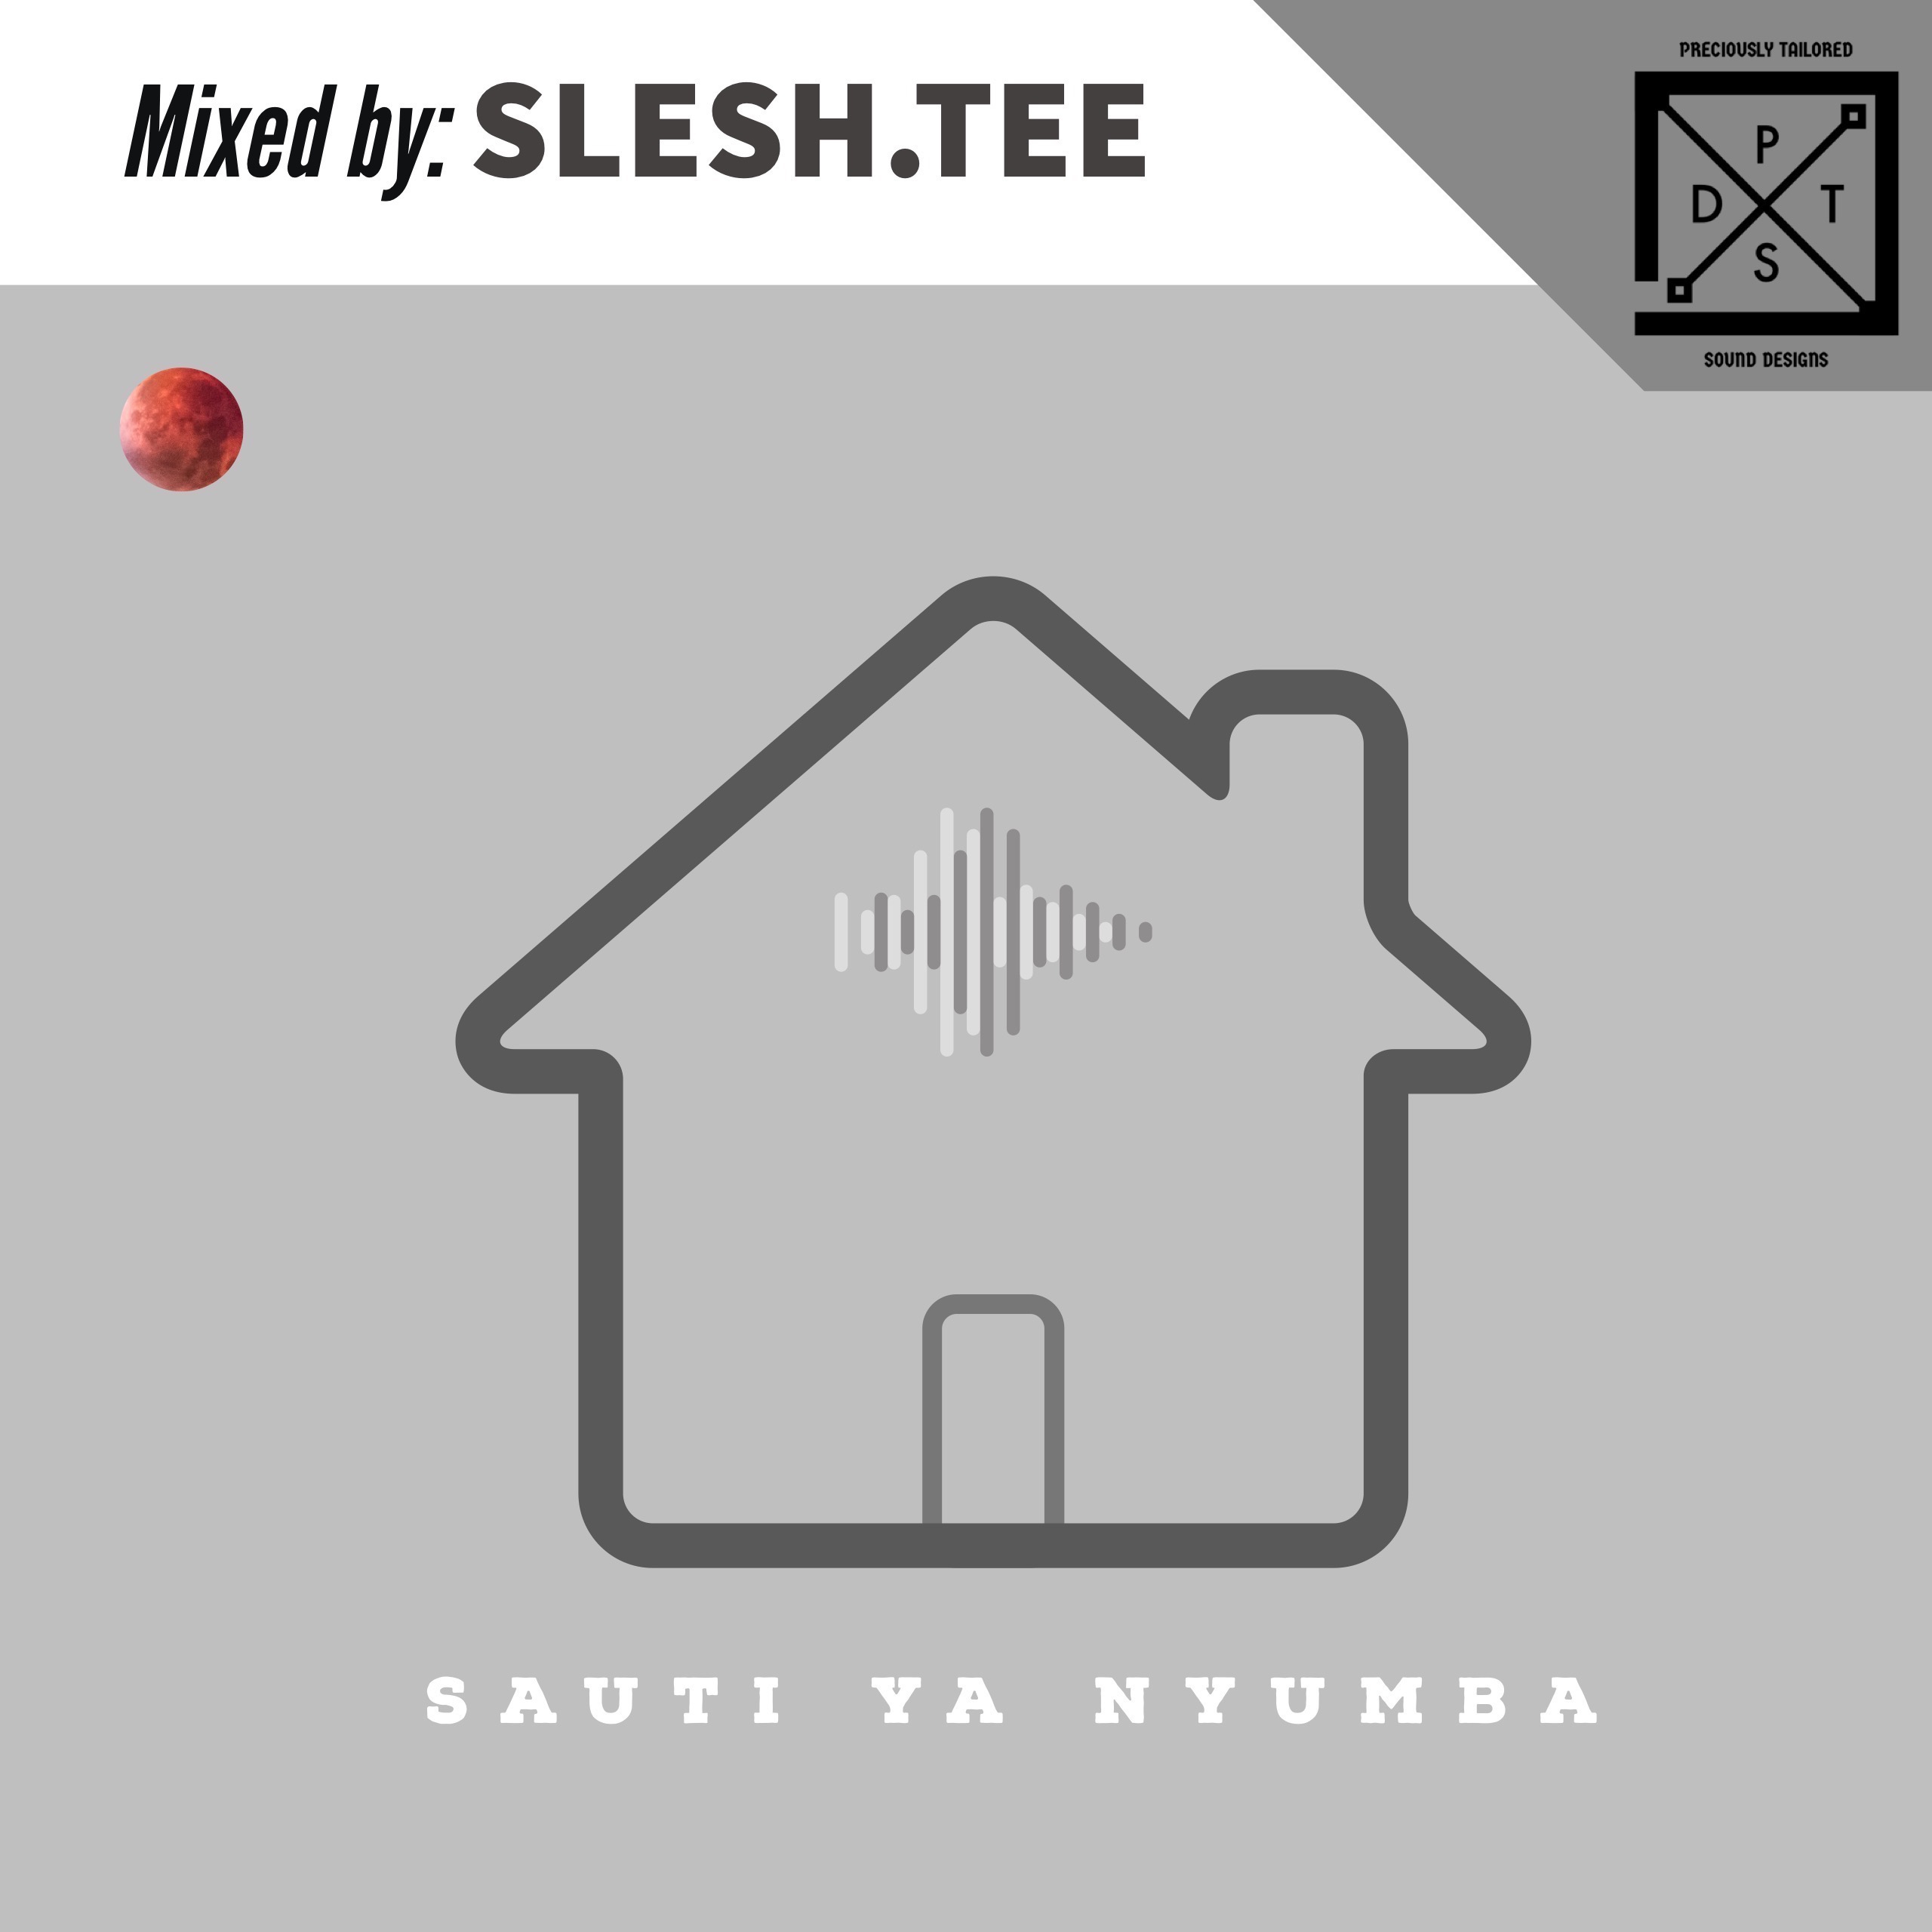 Episode 24: SAUTI YA NYUMBA Vol.24 curated by Slesh.Tee